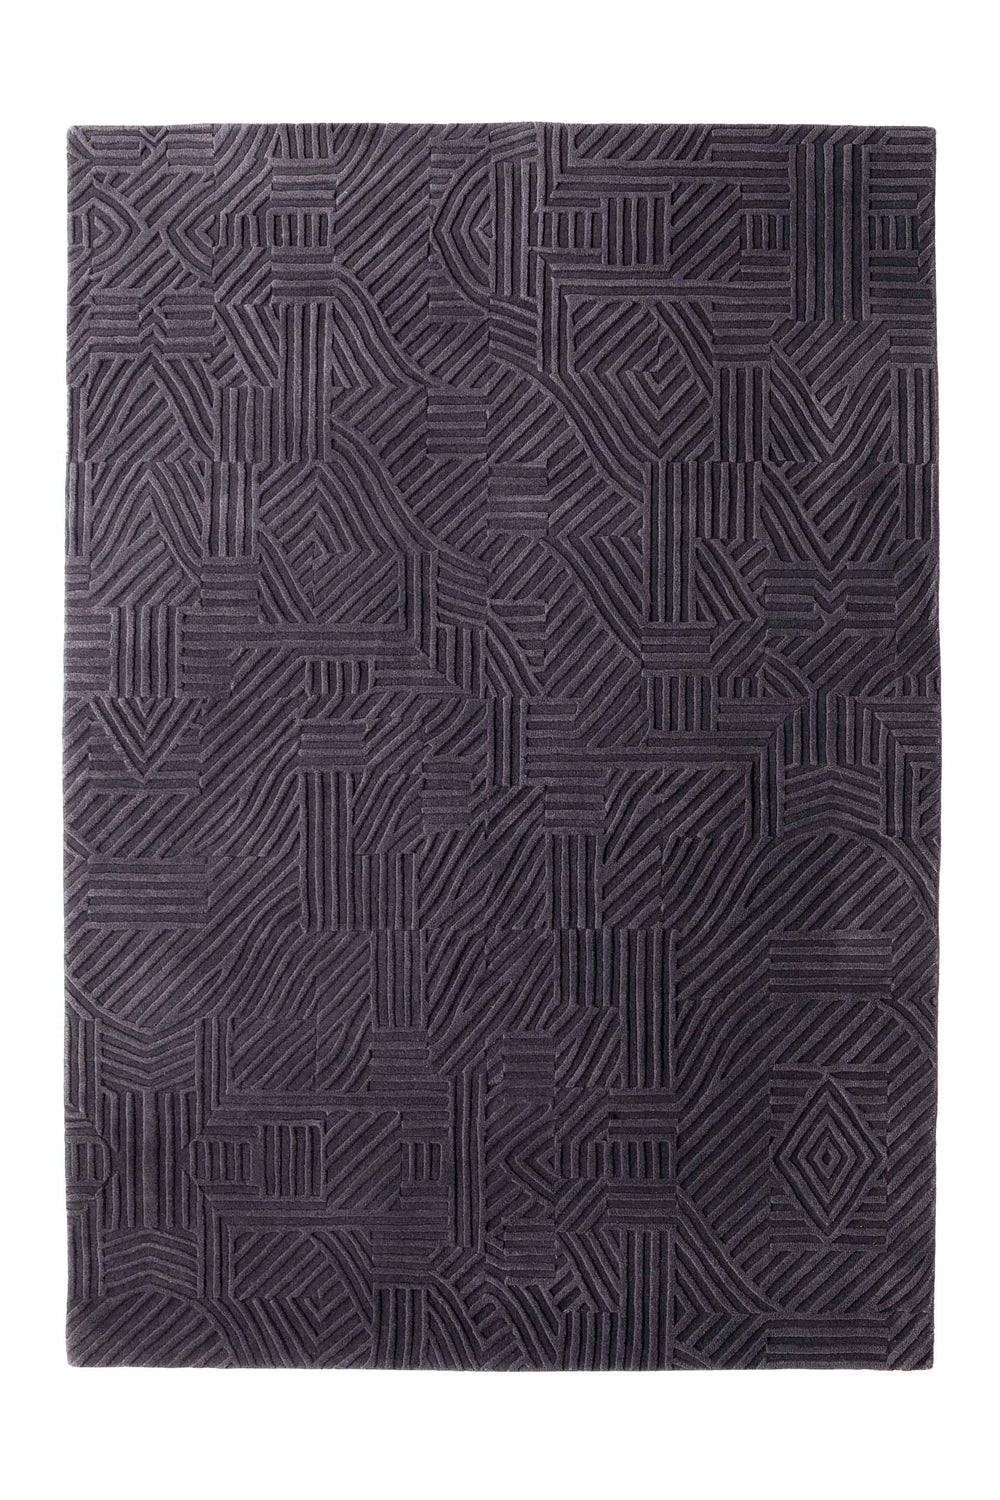 Milton Glaser African Pattern 3 Rug